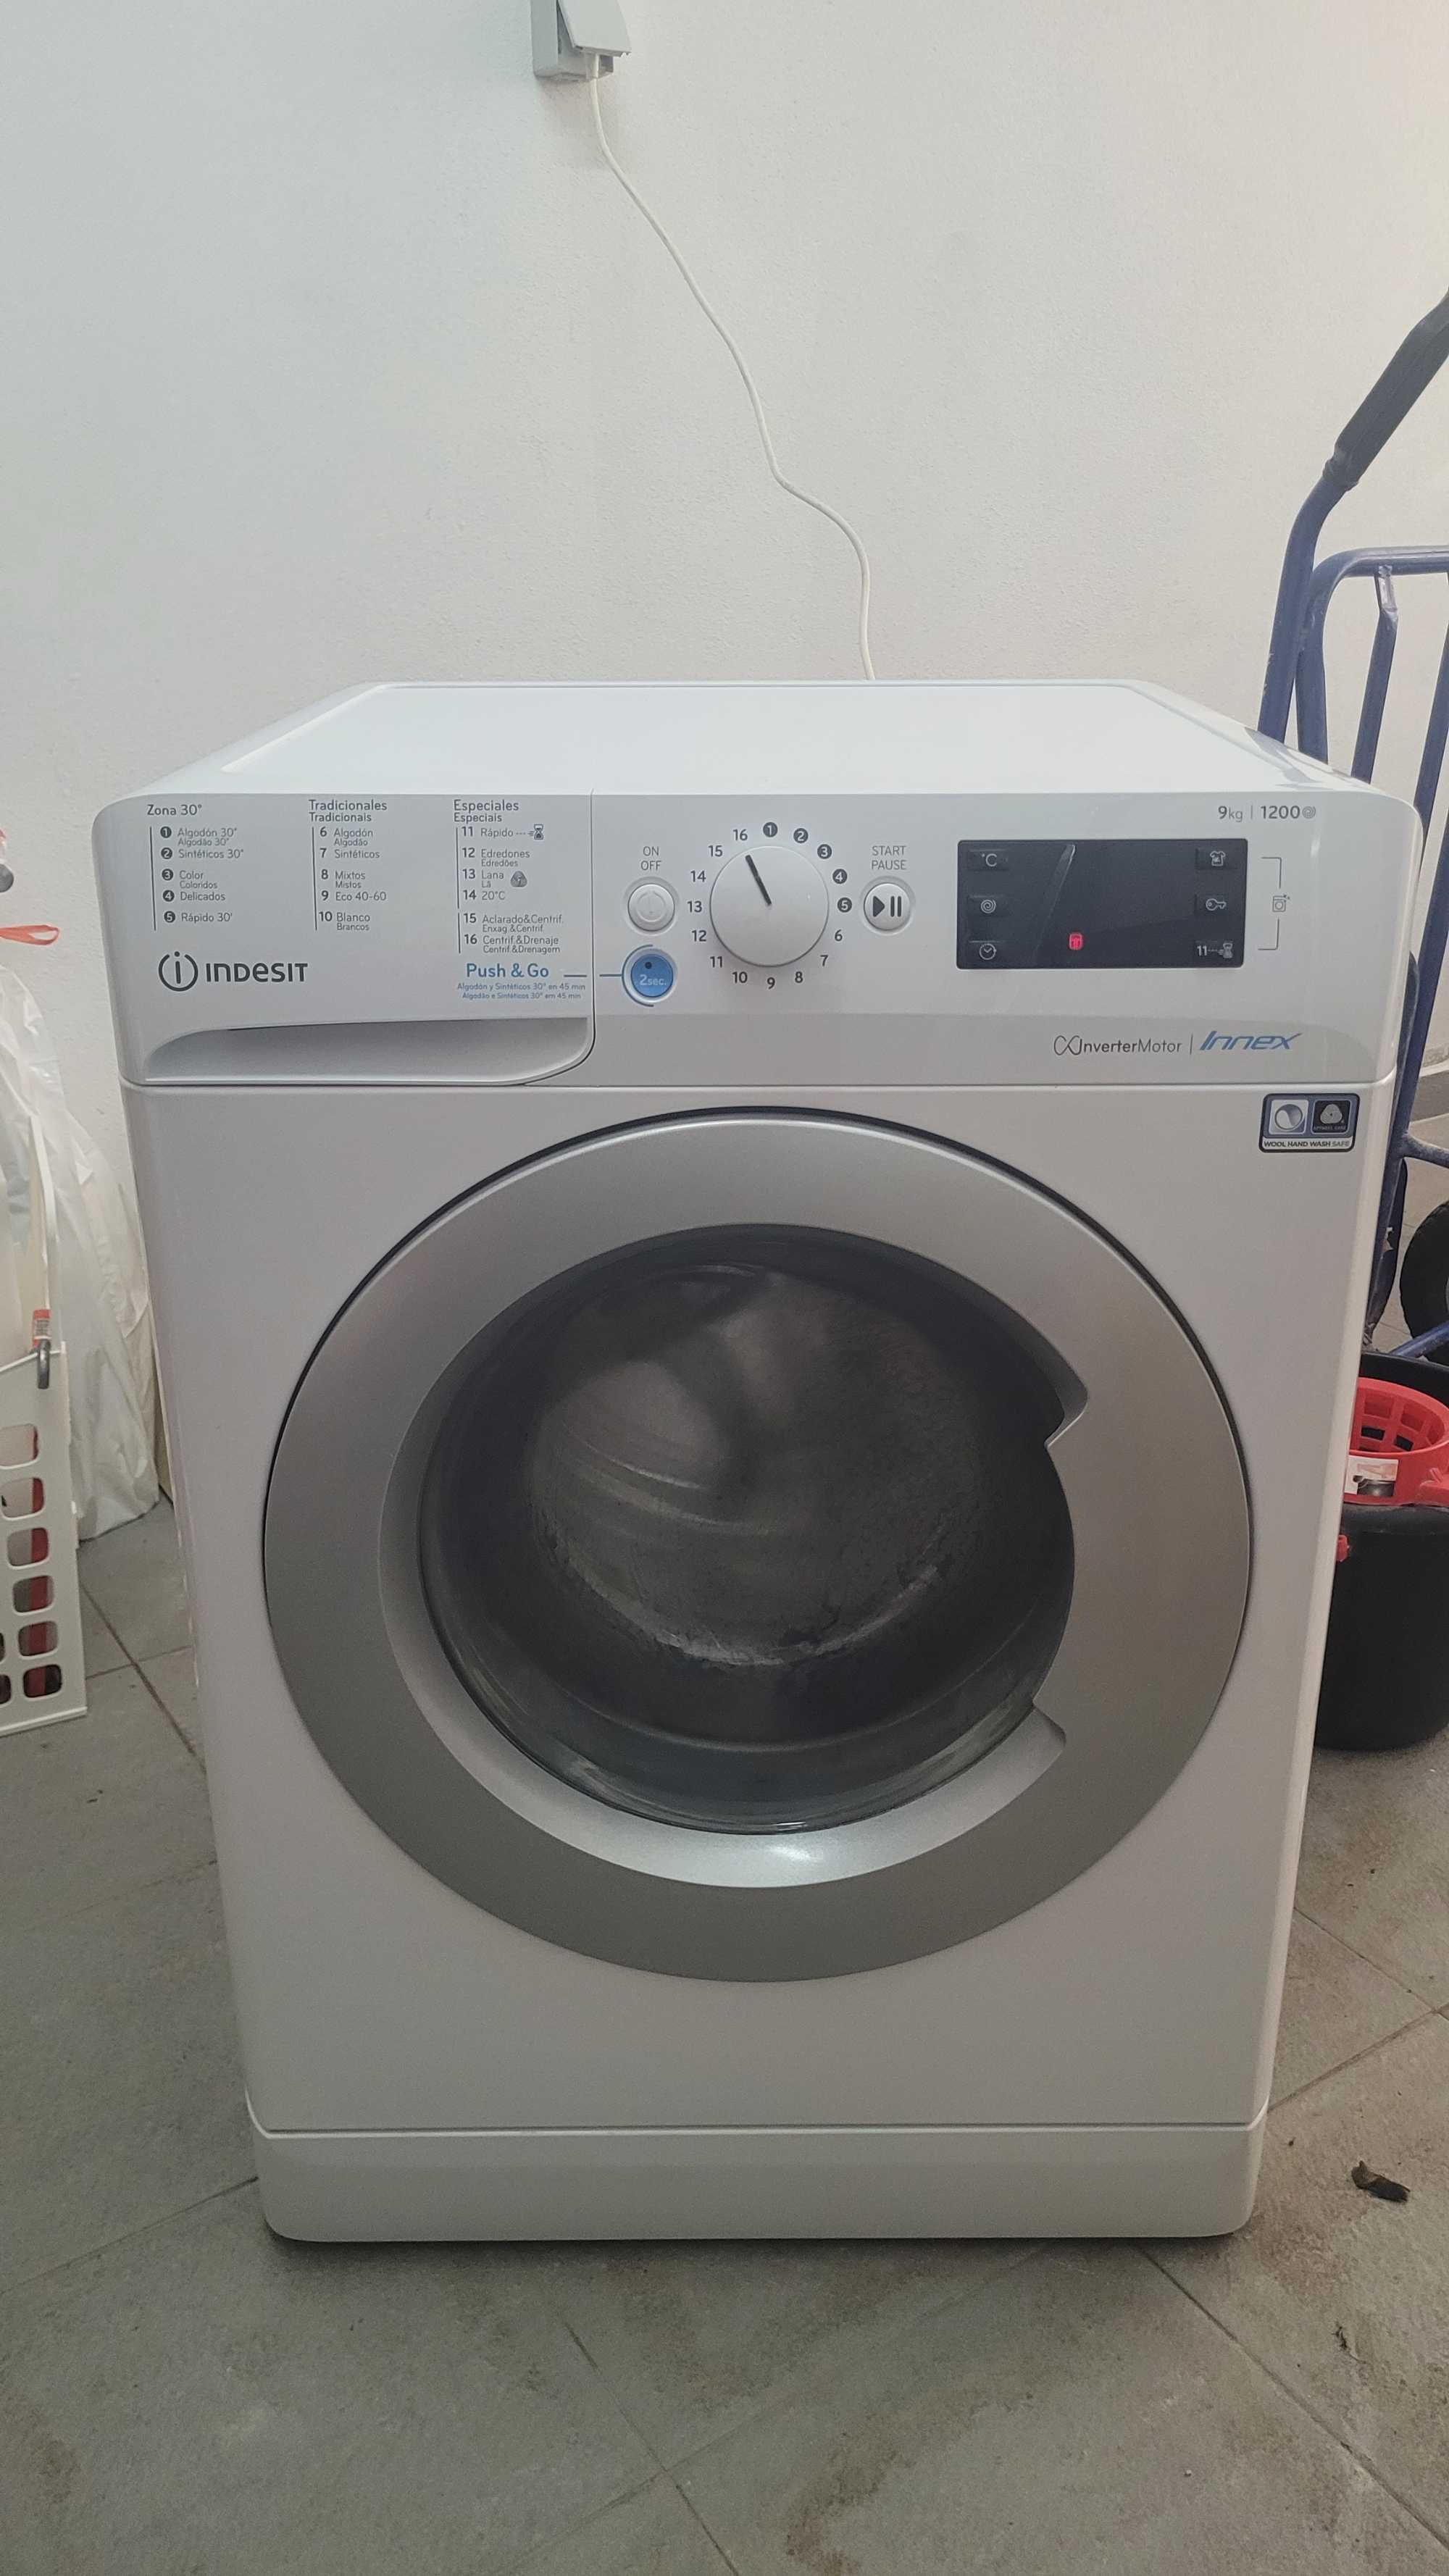 Máquina de lavar roupa, Indesit com 2 anos.